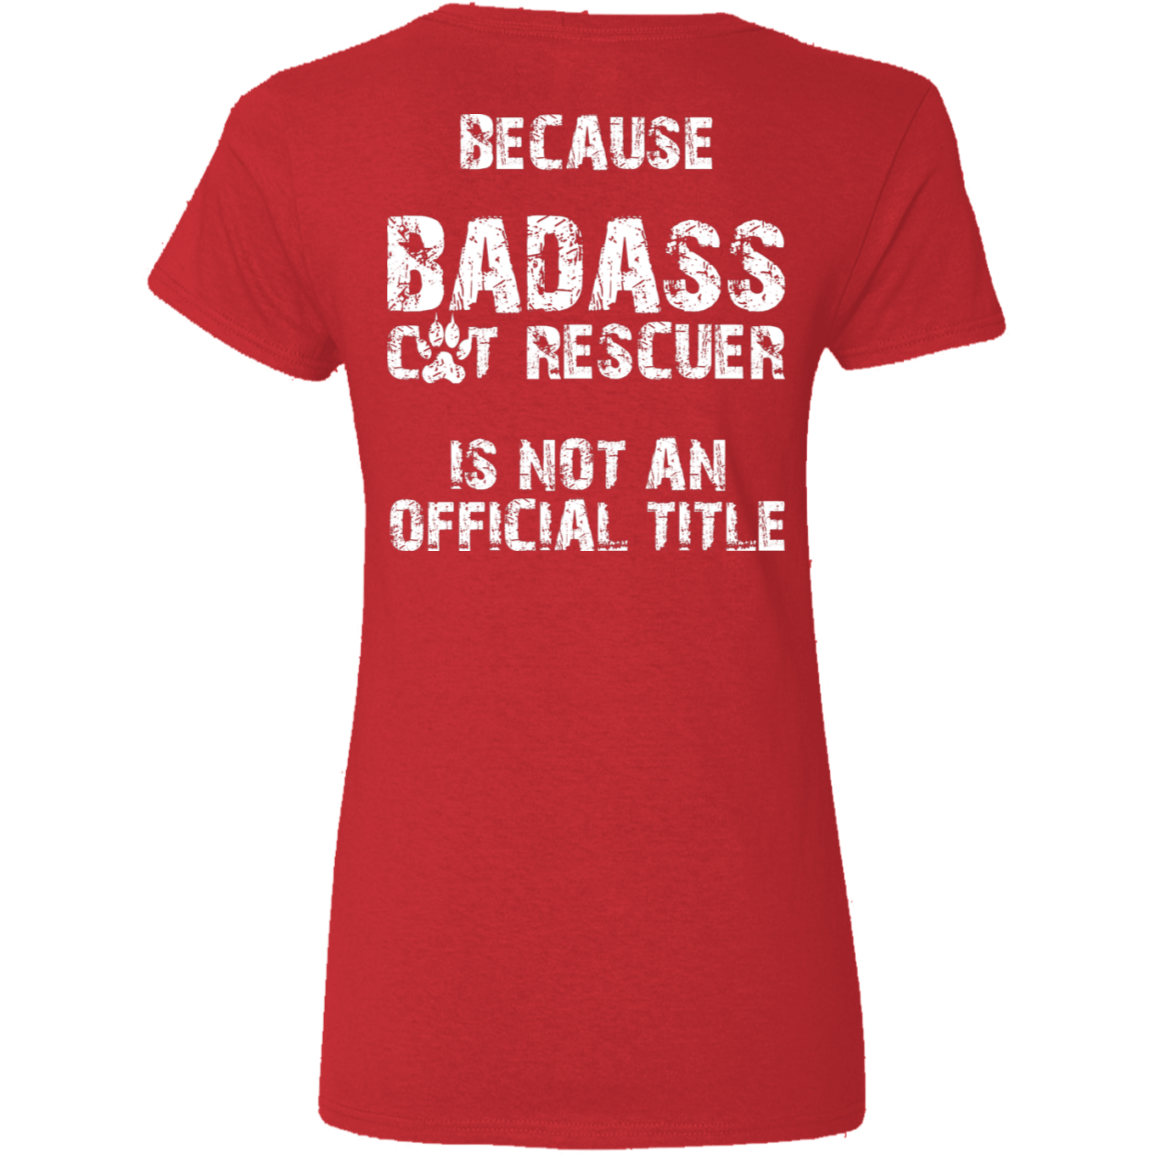 Bad*ss Cat Rescuer - Ladies V Neck Rescuers Club